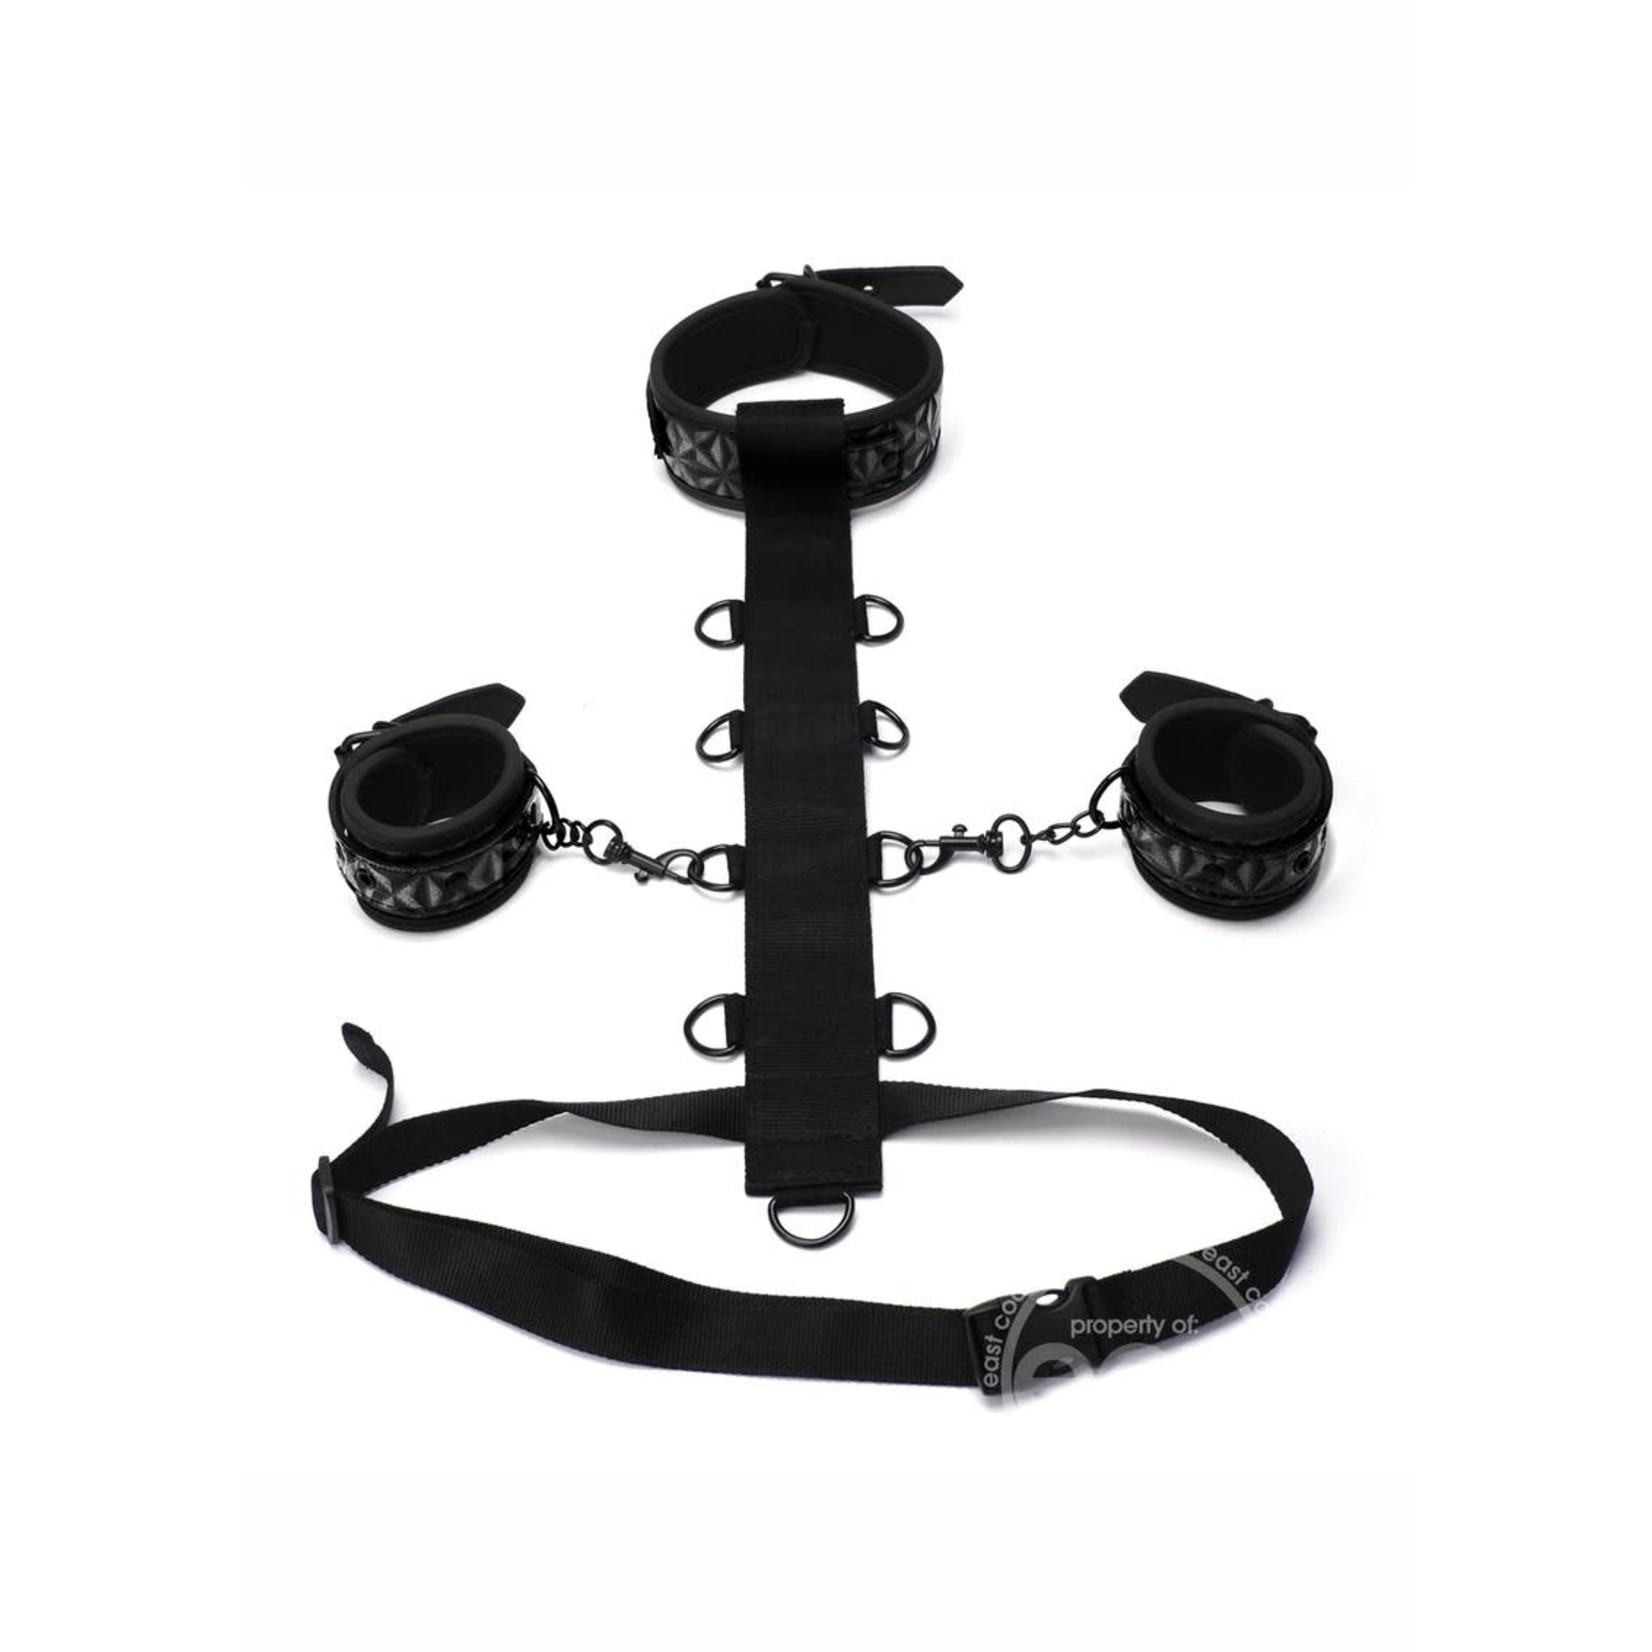 Whipsmart Adjustable Body Harness Restraint 3pc - Black